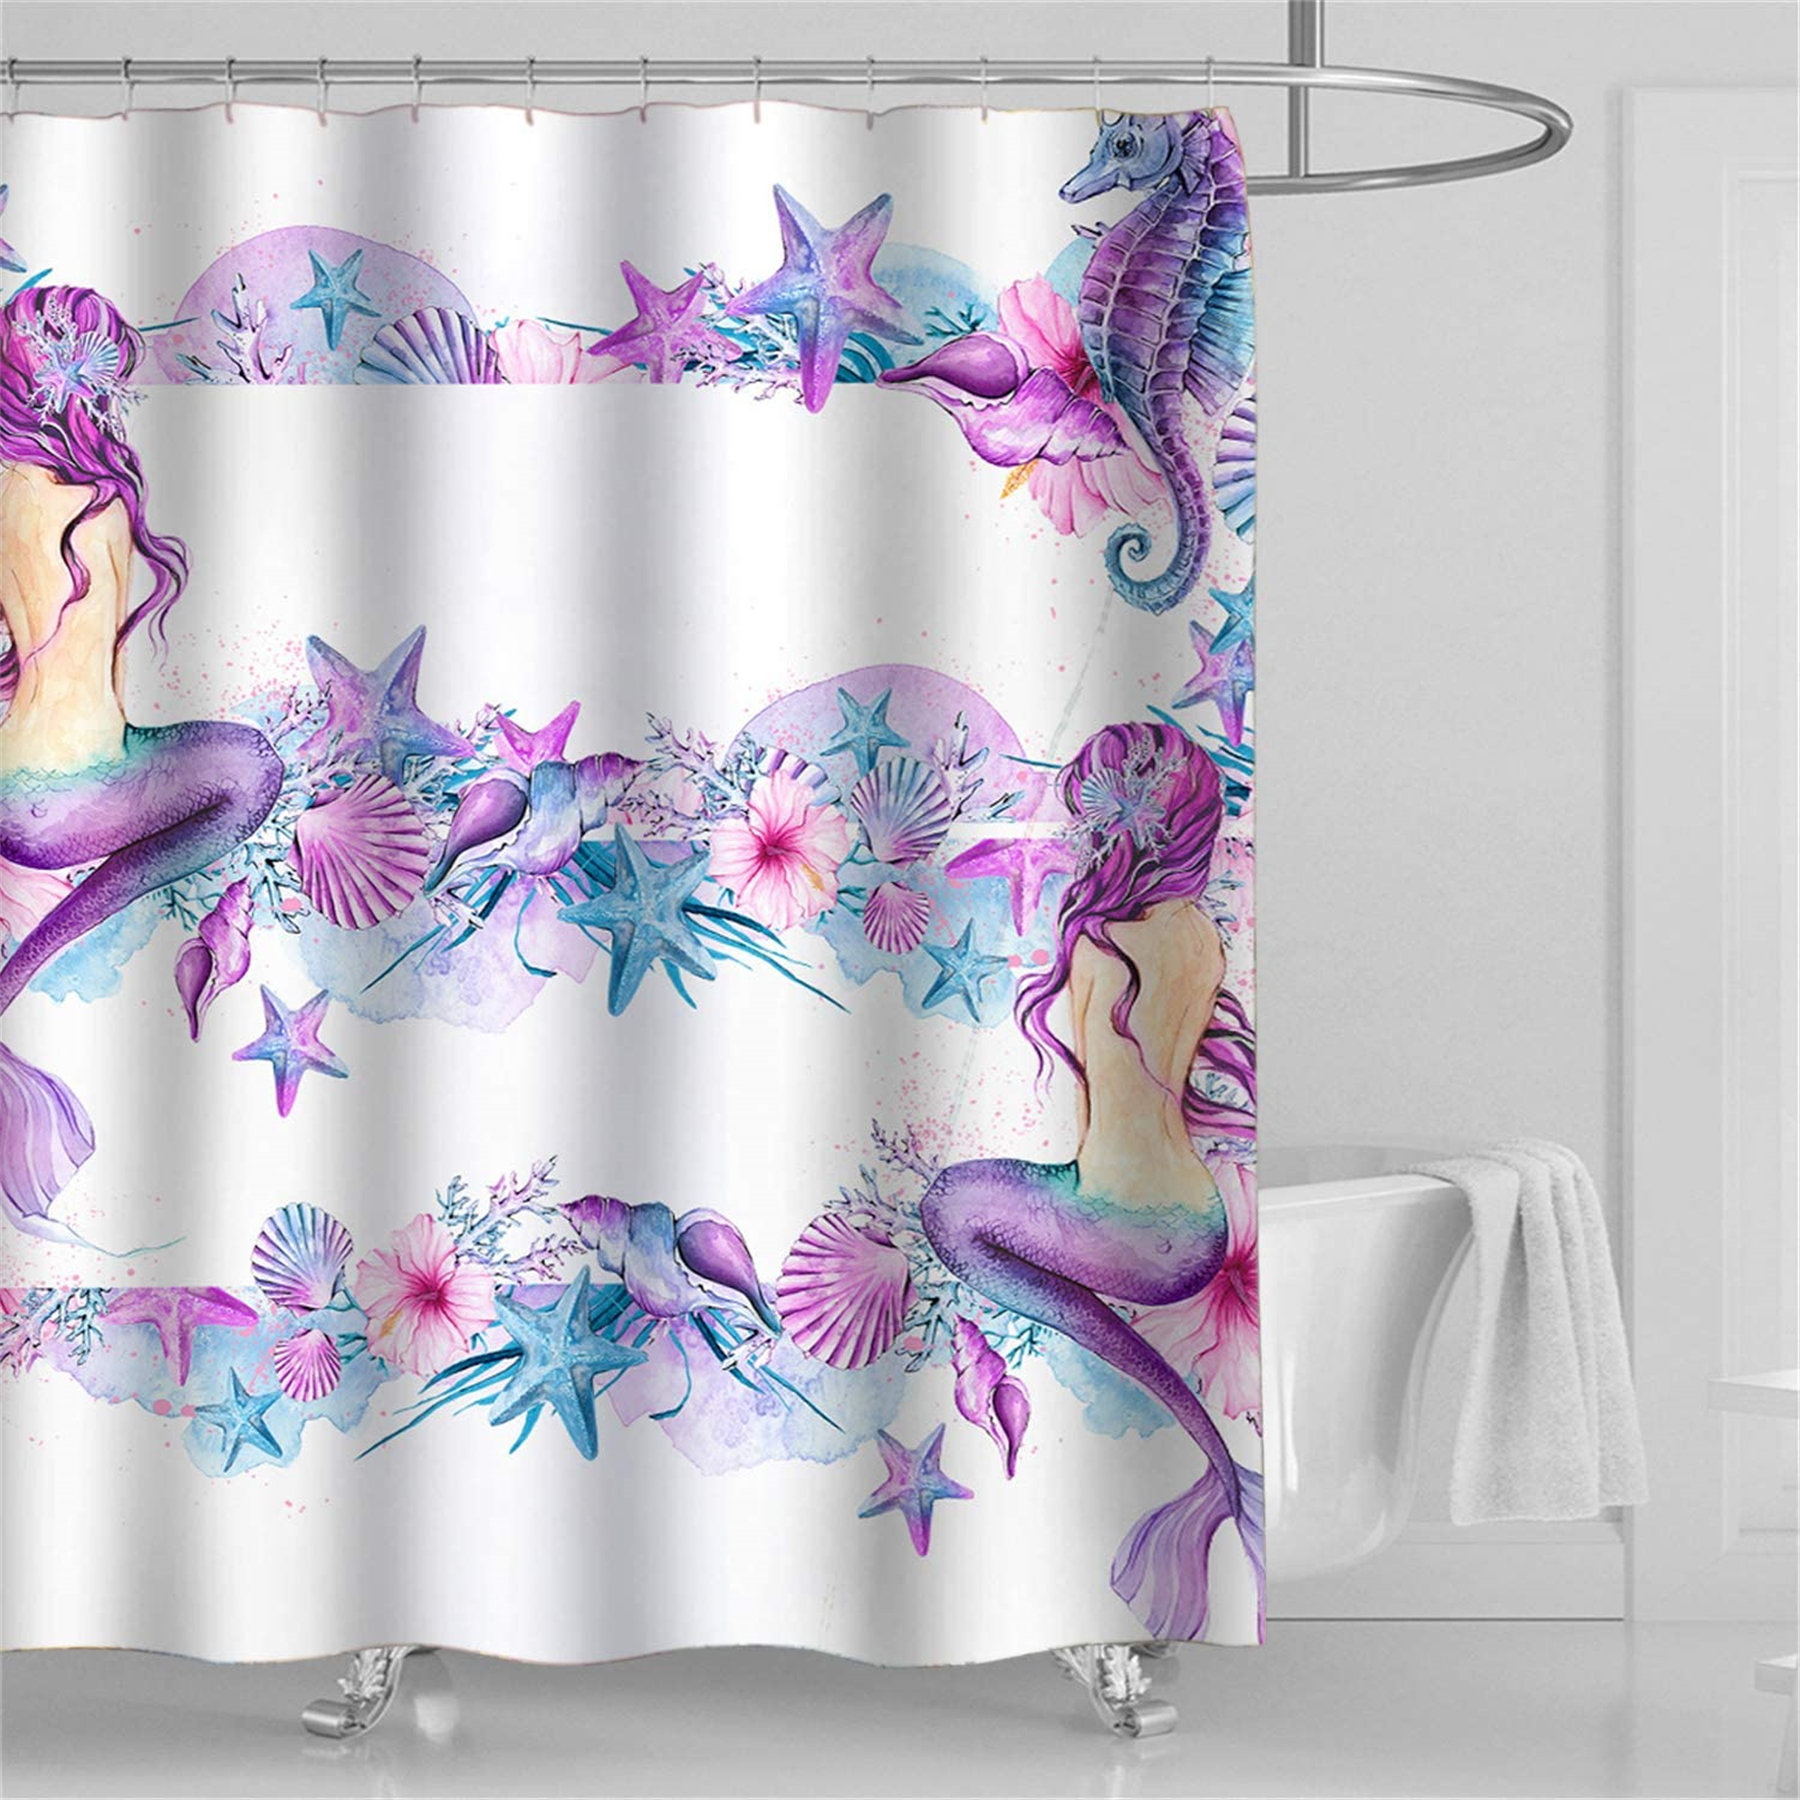 72x72" Beautiful Mermaid Waterproof Fabric Shower Curtain Set Bathroom & Hooks 